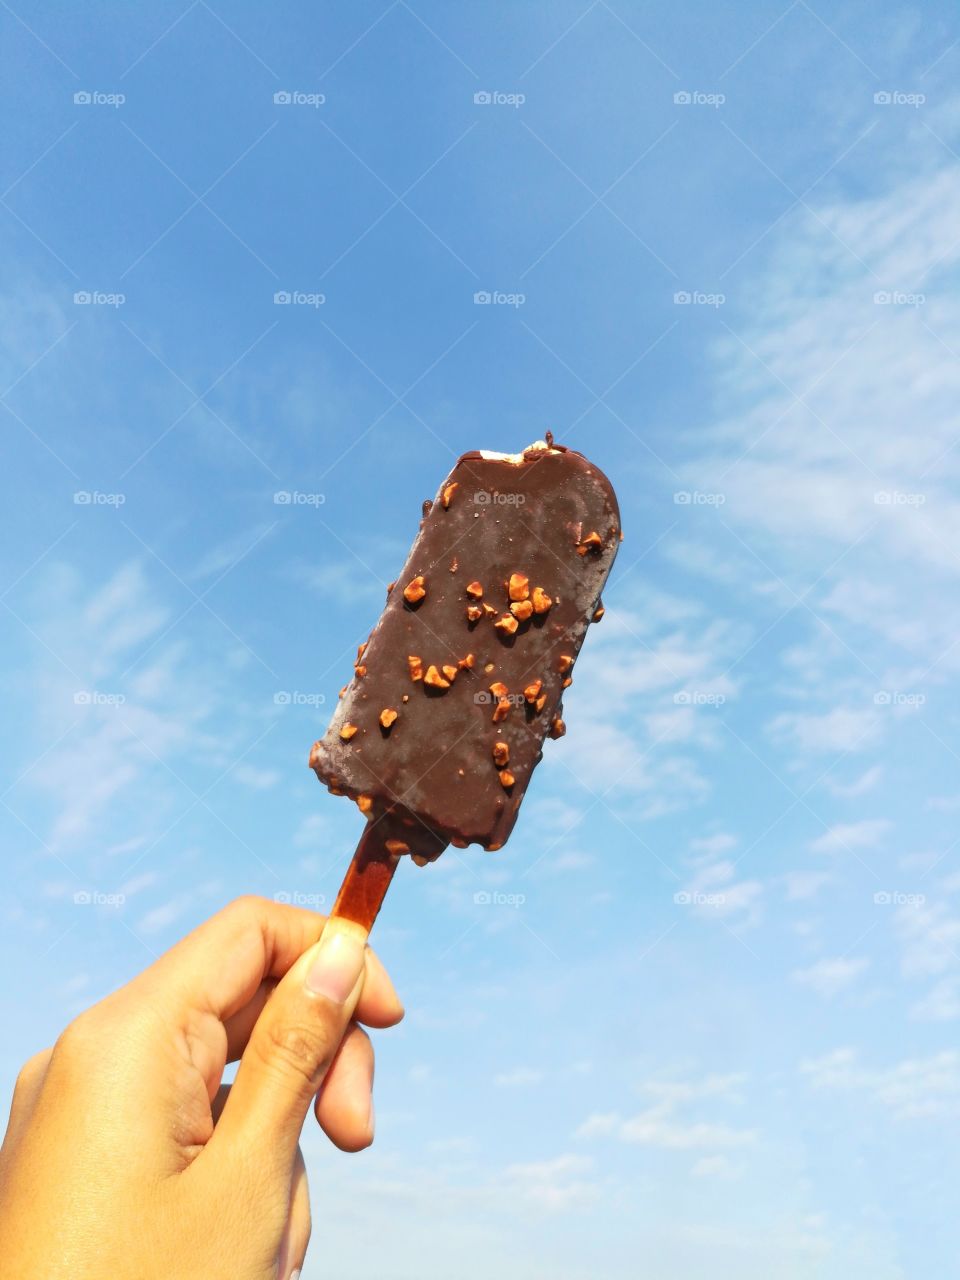 Chocolate ice against beautiful sky in summer season.